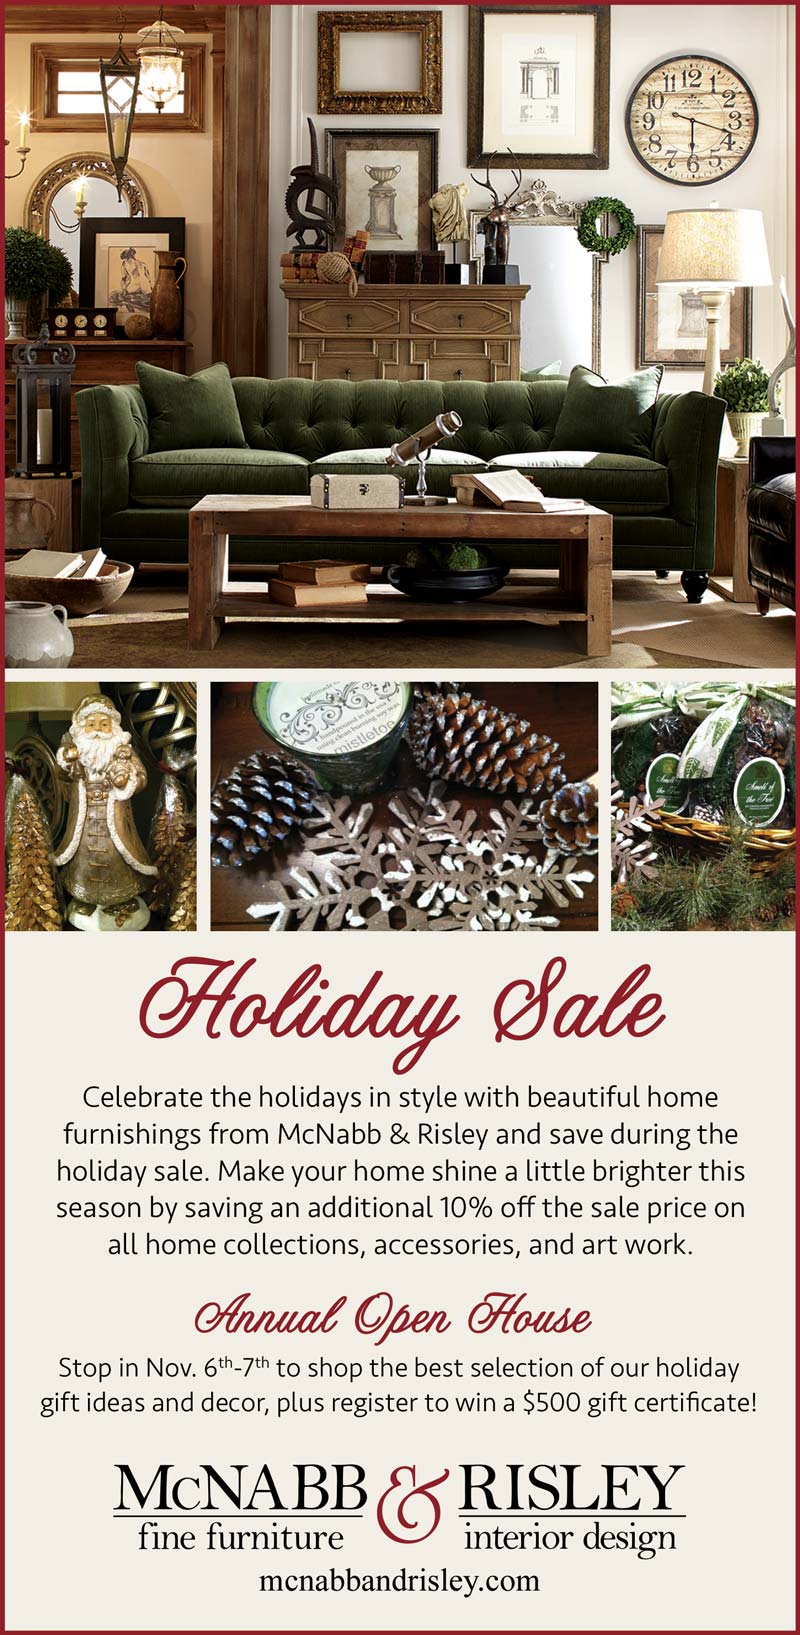 Visit us during the Holiday Sale! - McNabb & Risley